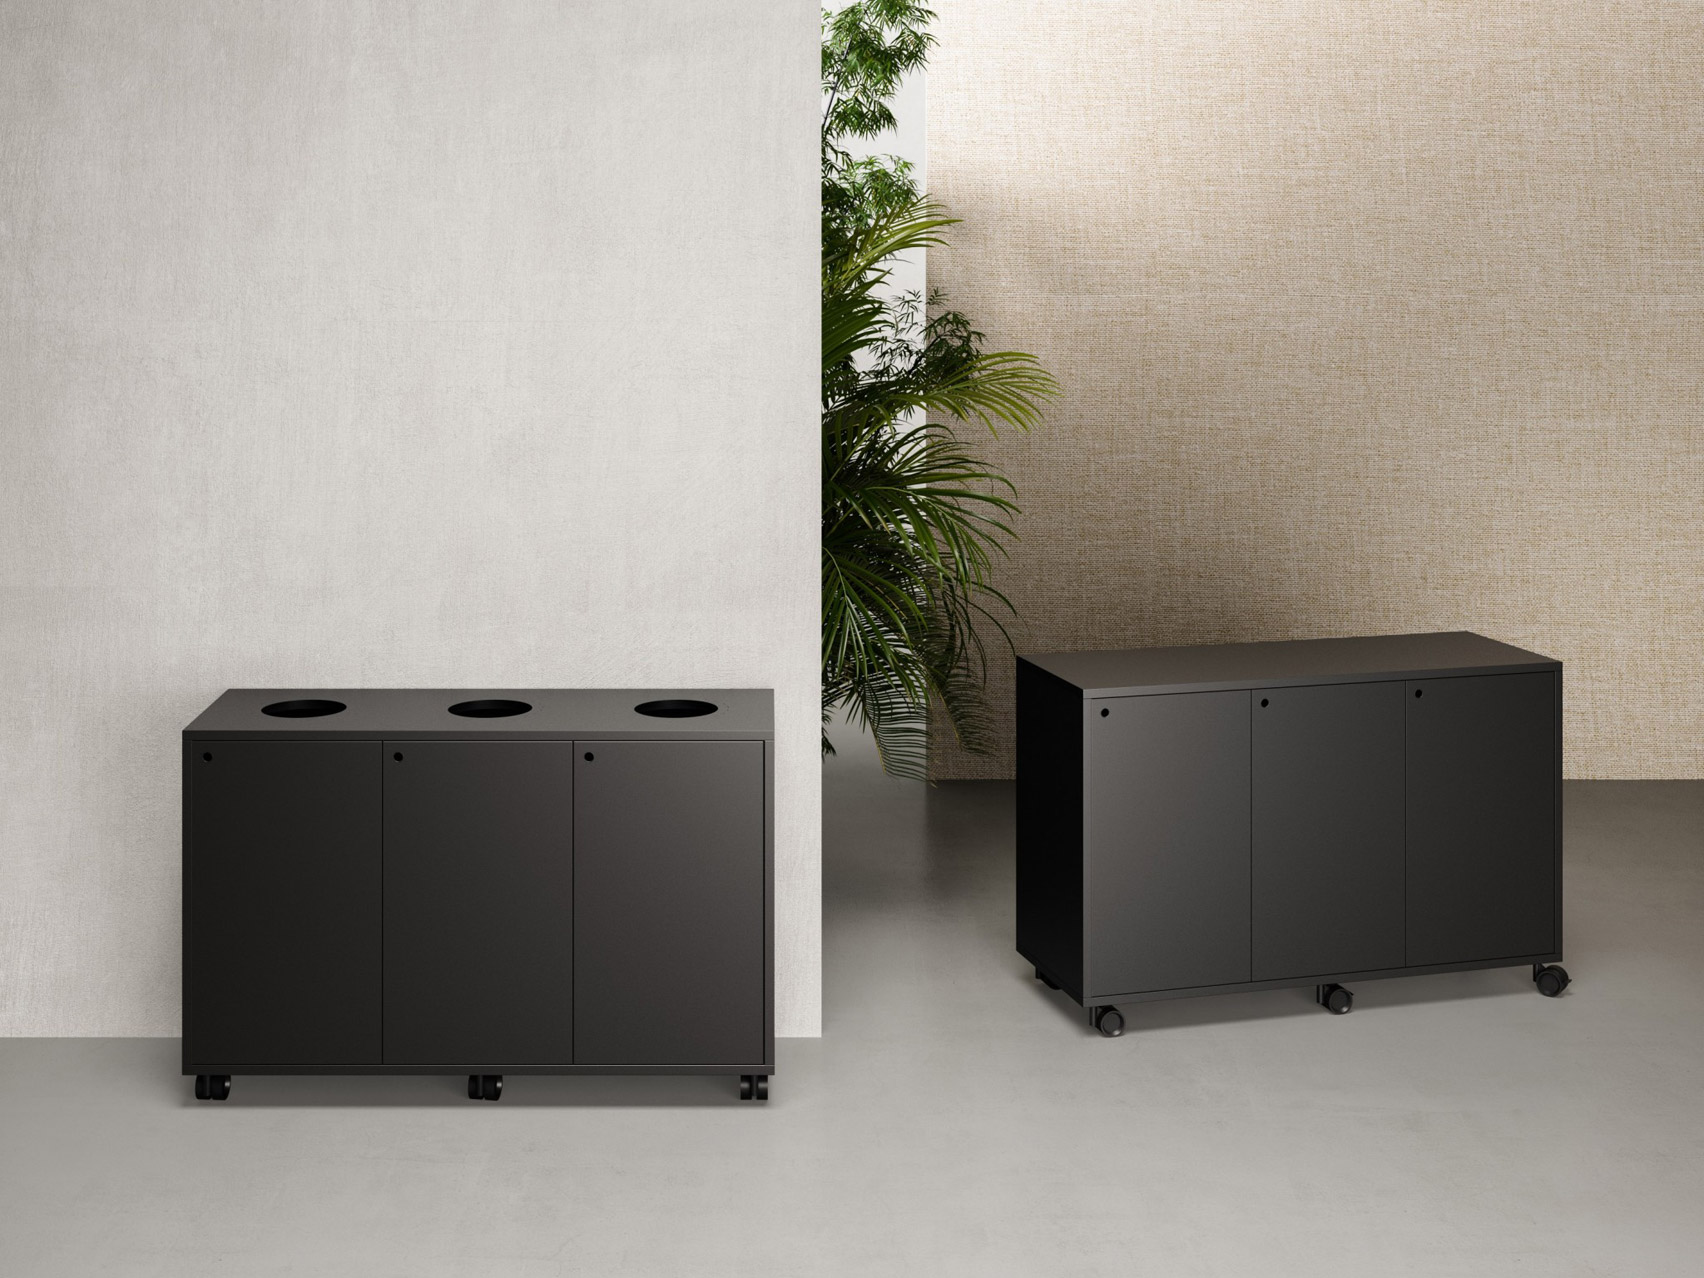 atelier-modular-furniture-system-gensler-workplace-design_dezeen_1704_col_6.jpg